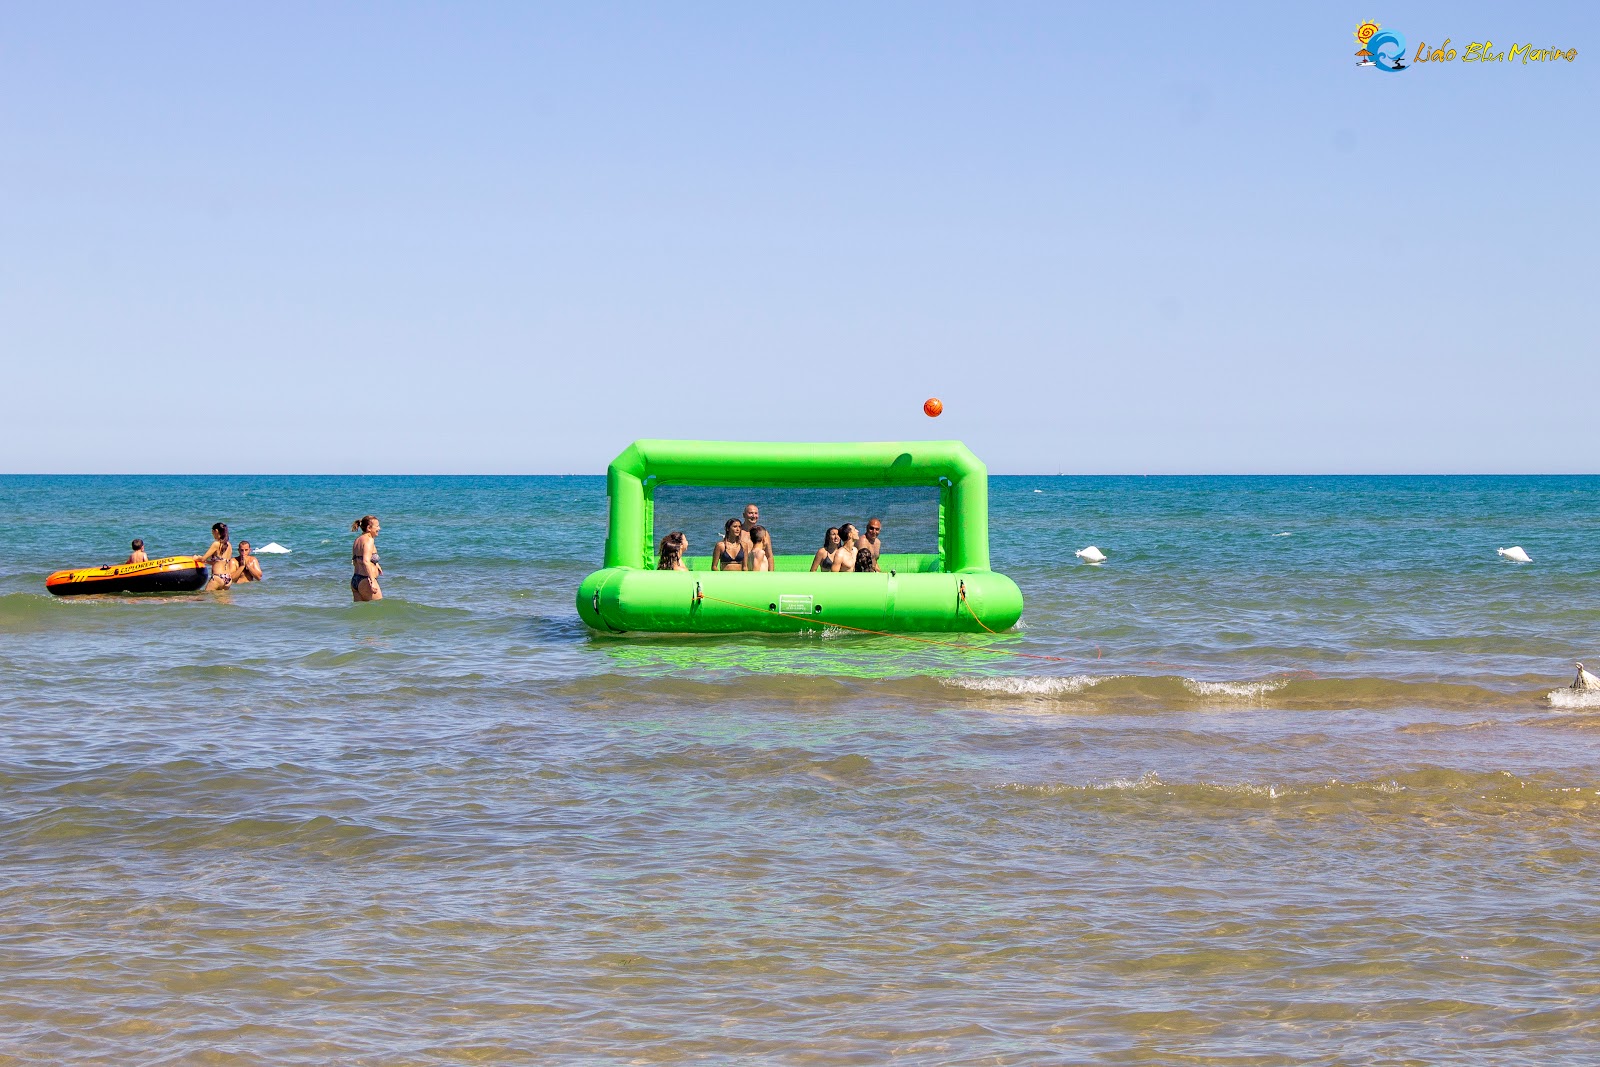 Foto de Spiaggia di Lido del Sole - lugar popular entre os apreciadores de relaxamento